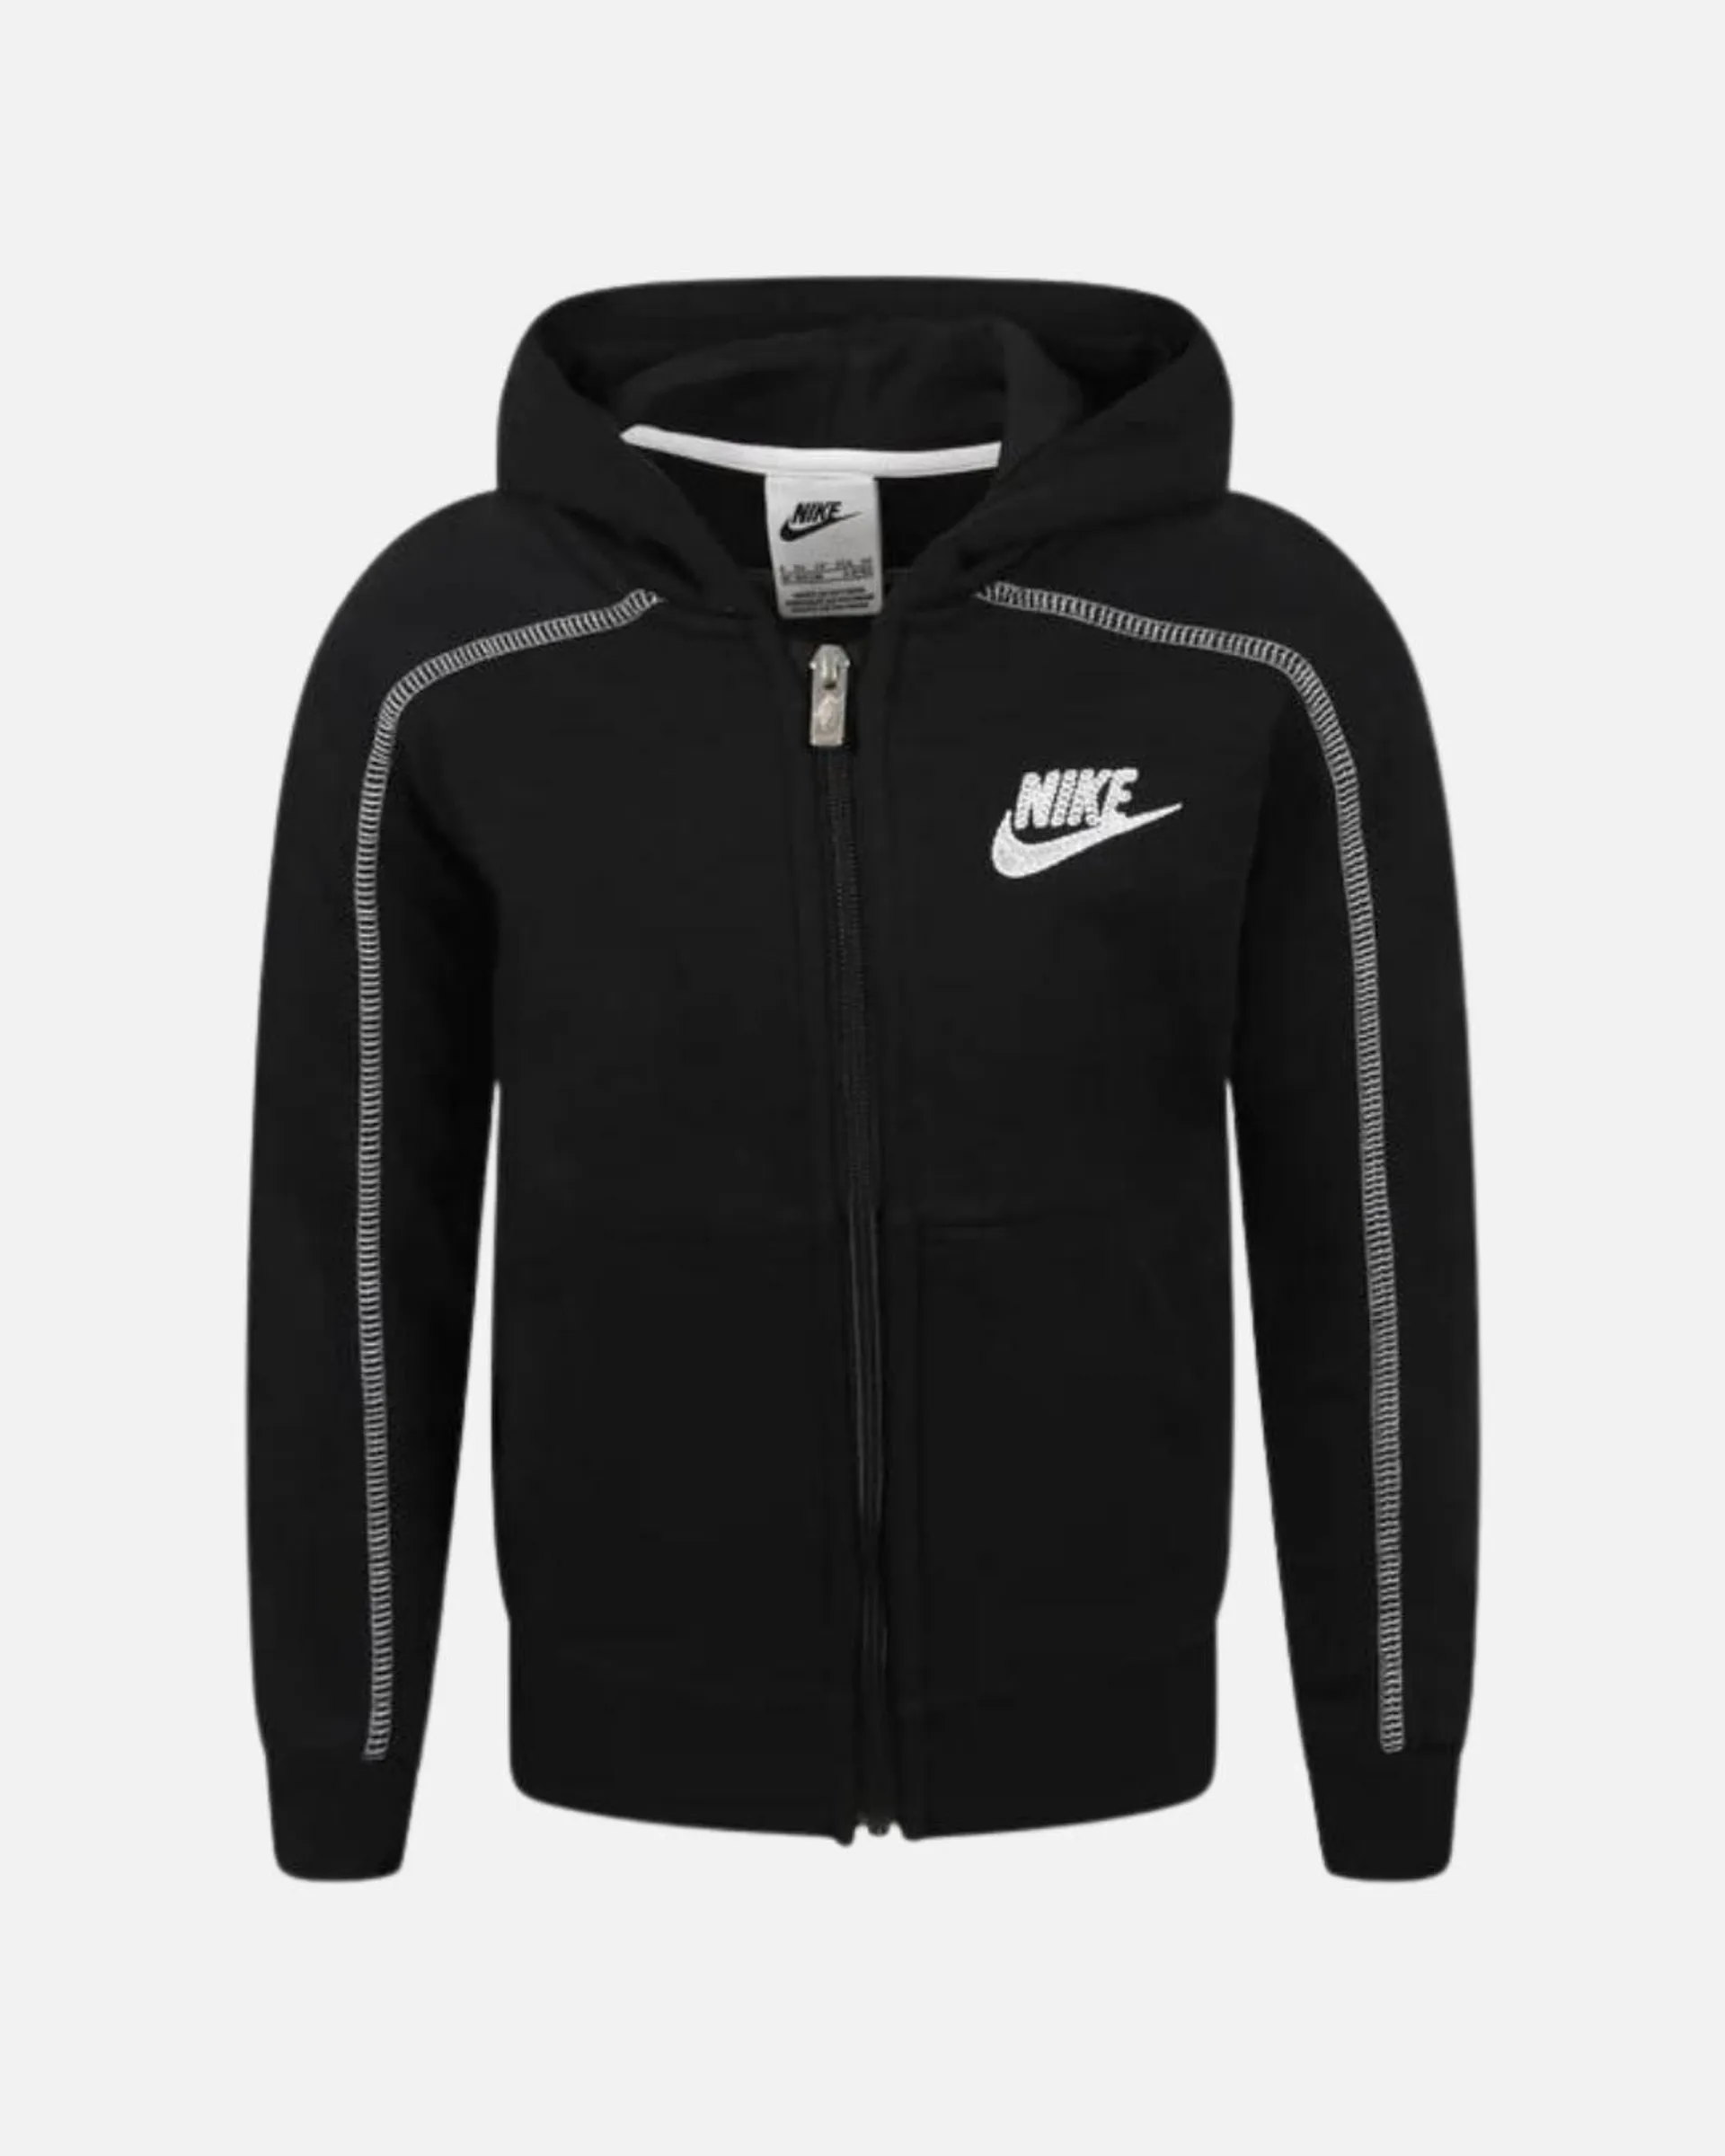 Nike Amplify Fleece Jacket - Black